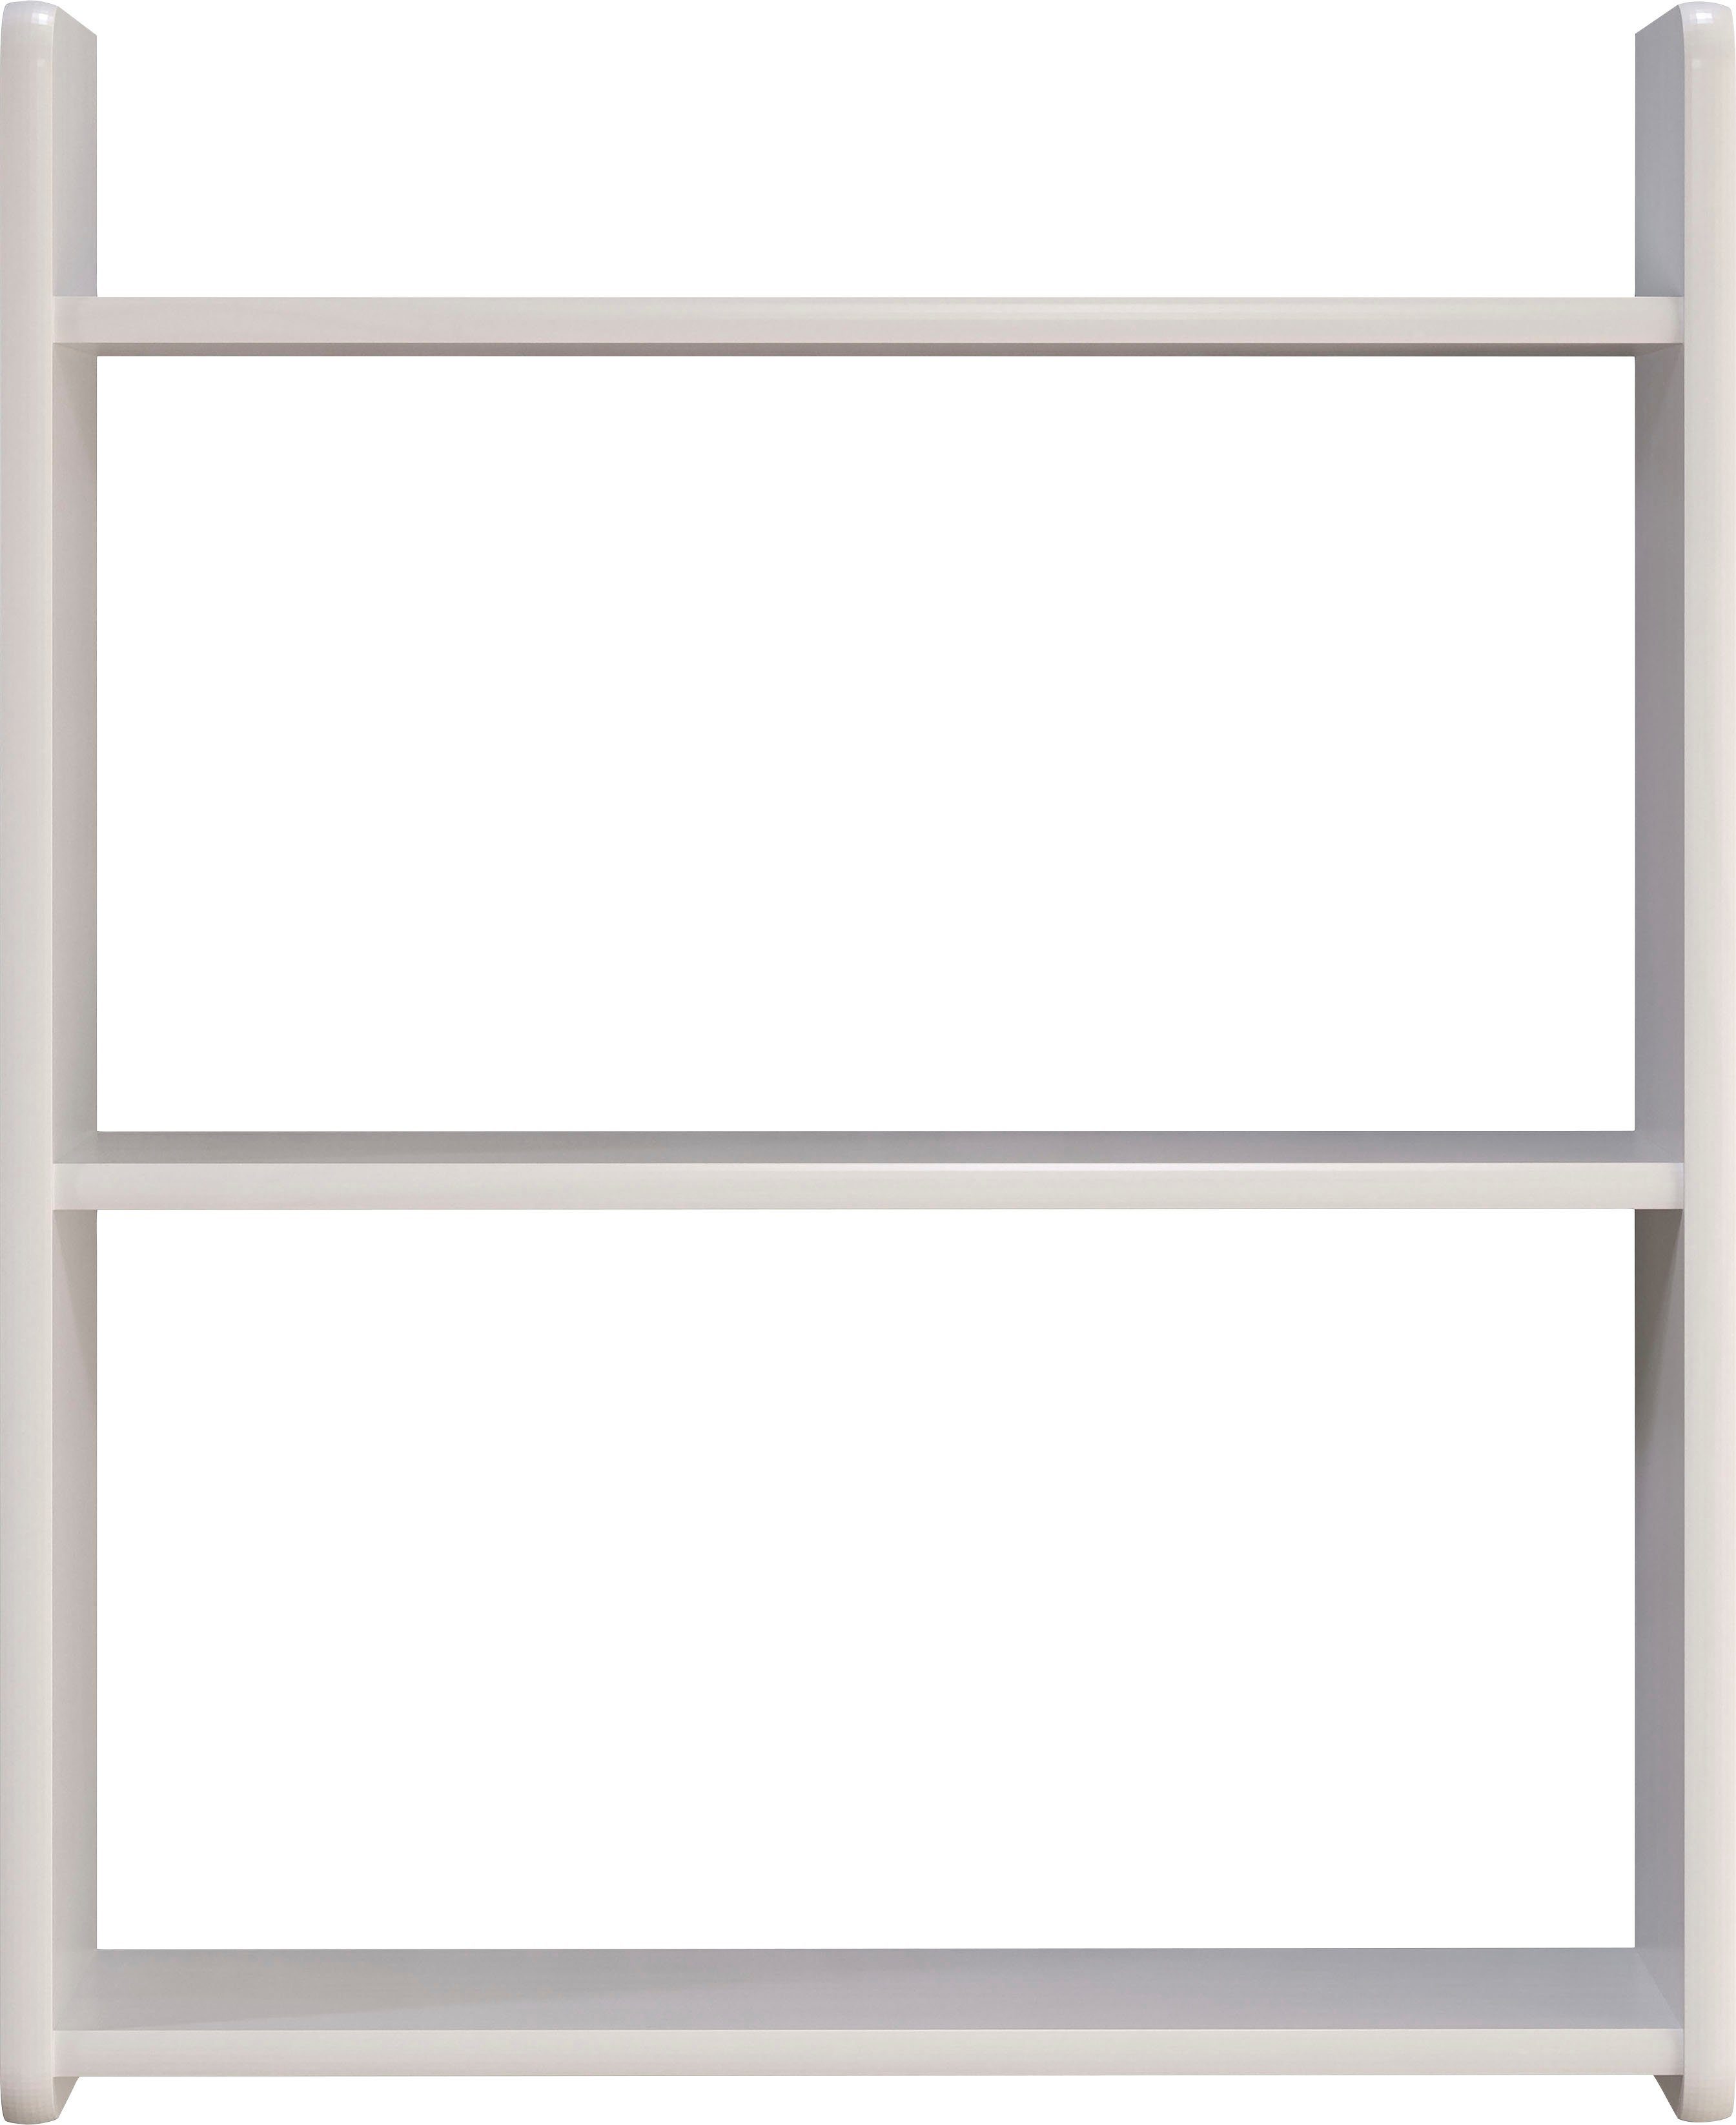 INTER-FURN Wandregal Interfurn Weiß Möbel Massivholz Kiefer, Massivholz Kiefer, lackiert Tolle der Mestre Weiß | Mestre, lackiert Erweiterung